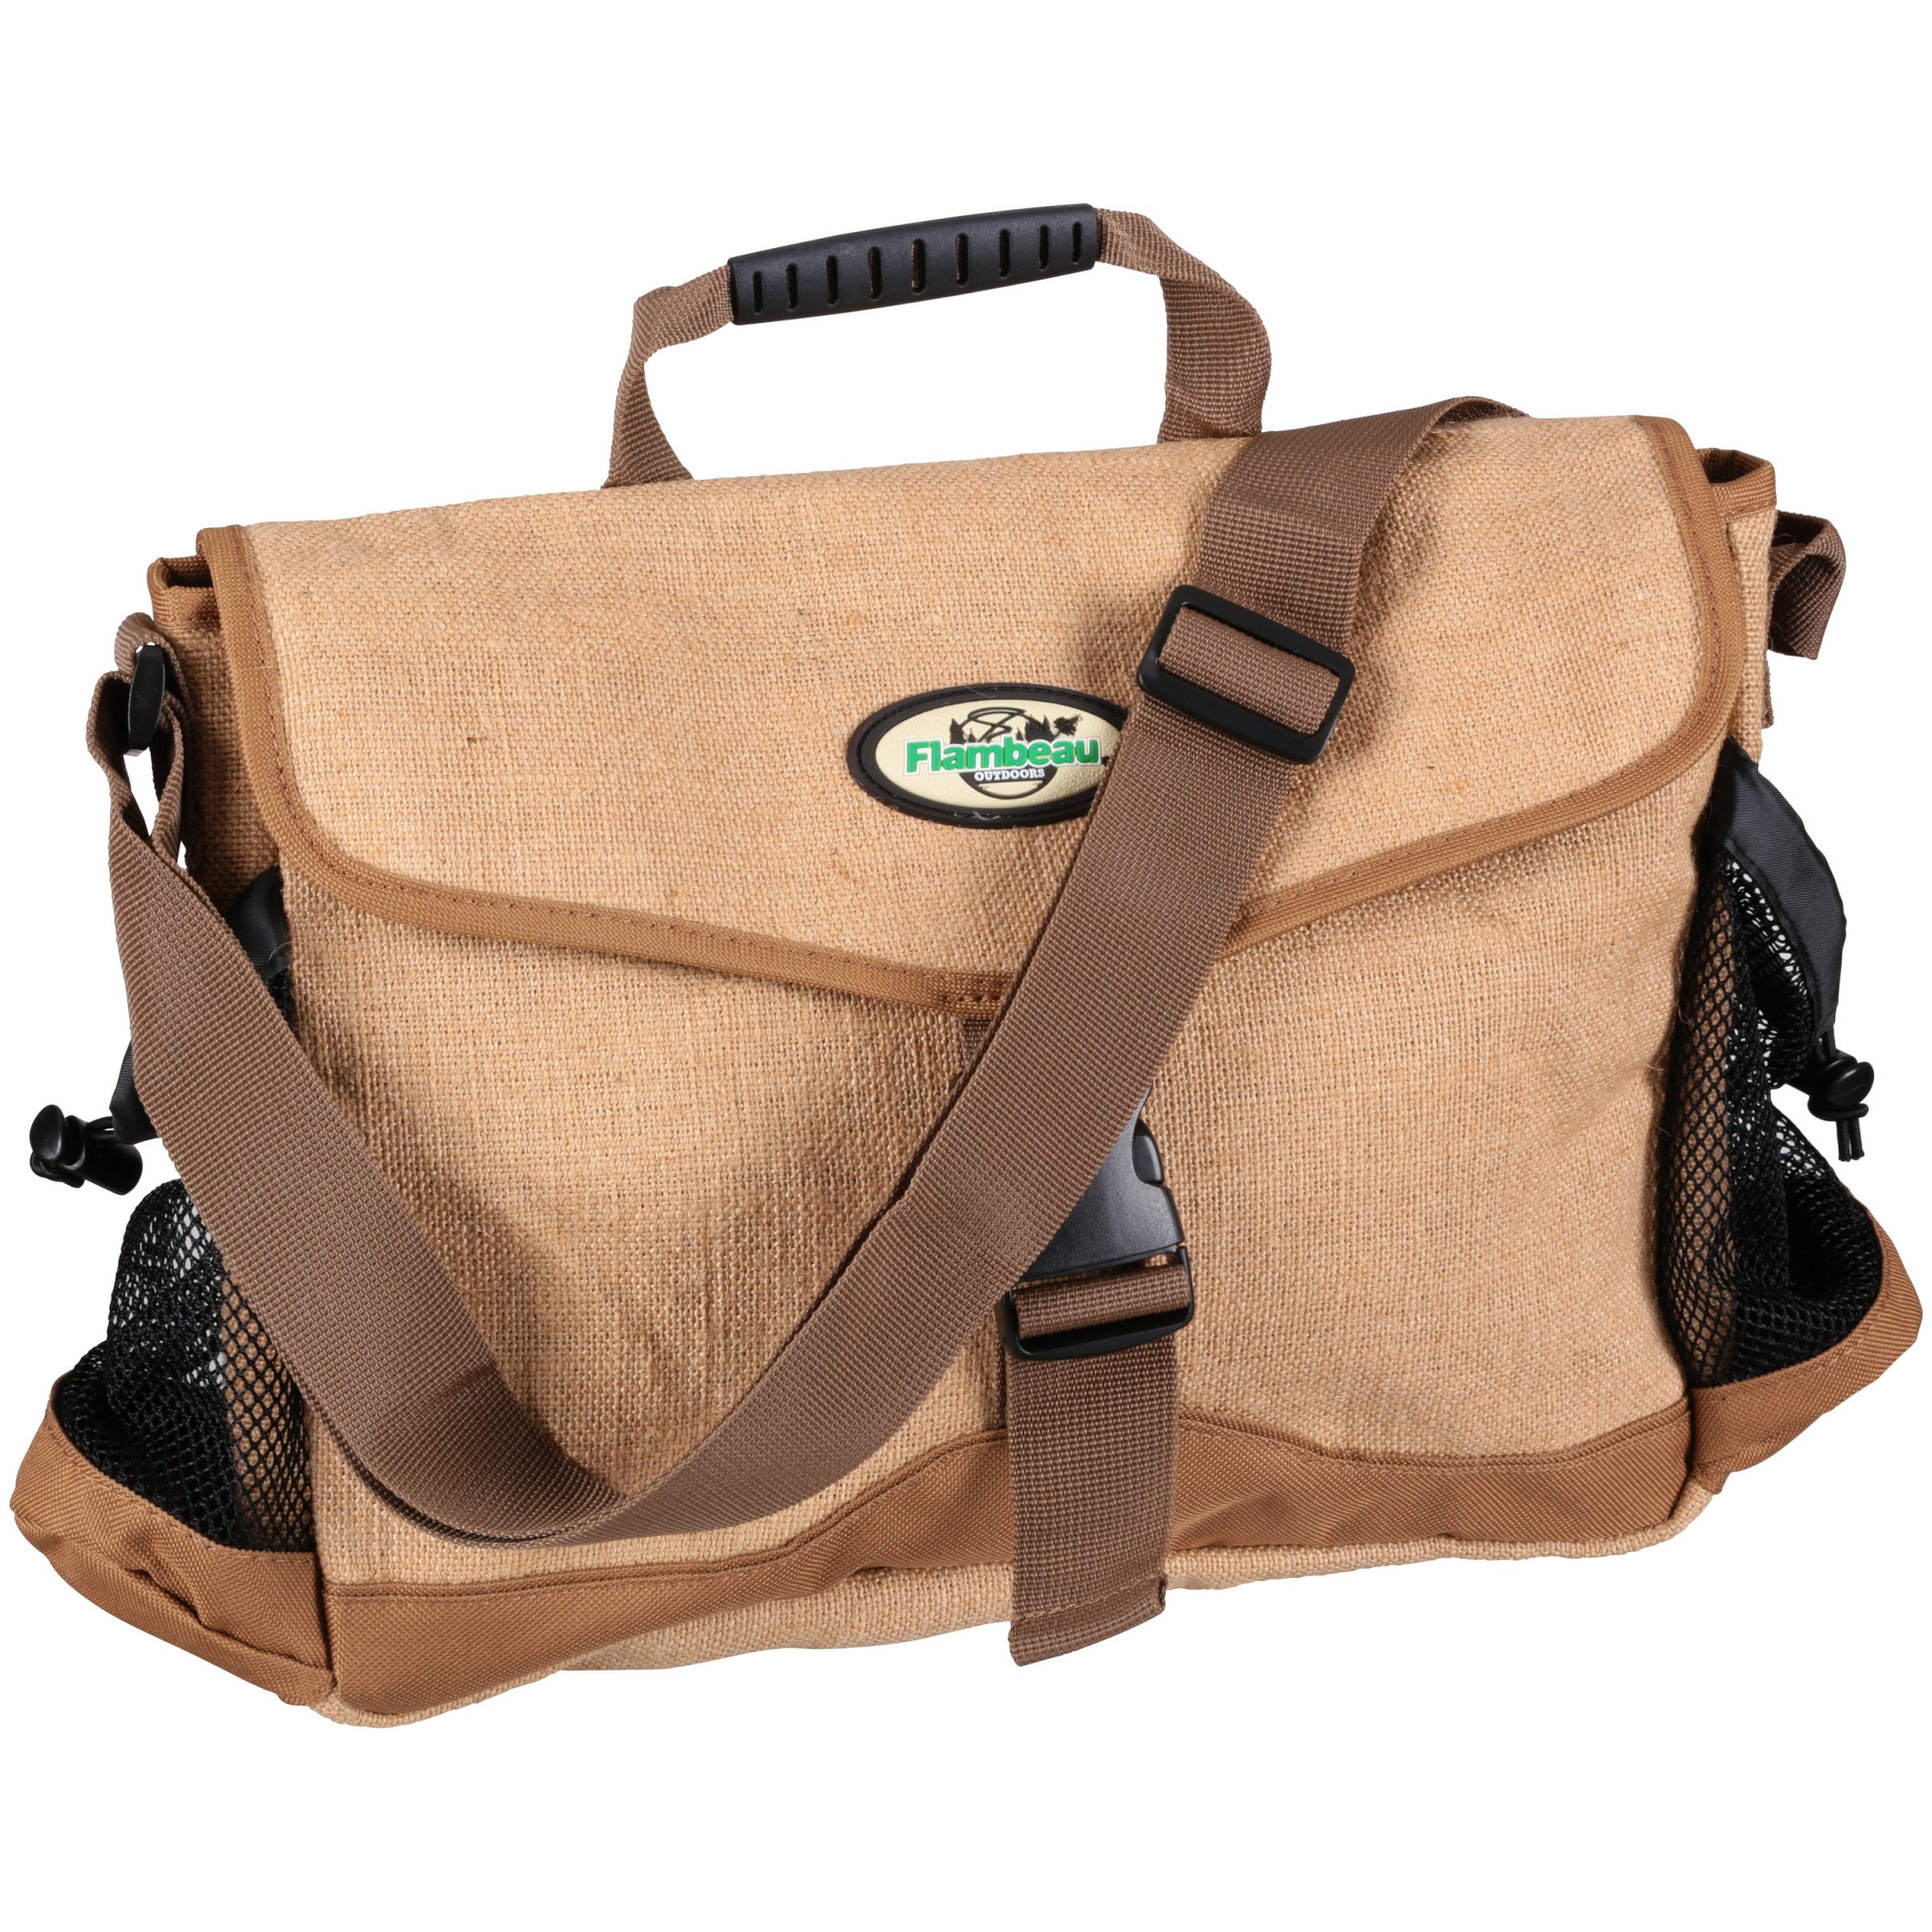 Buy Flambeau Outdoors Flax Creel Bag Online Nepal